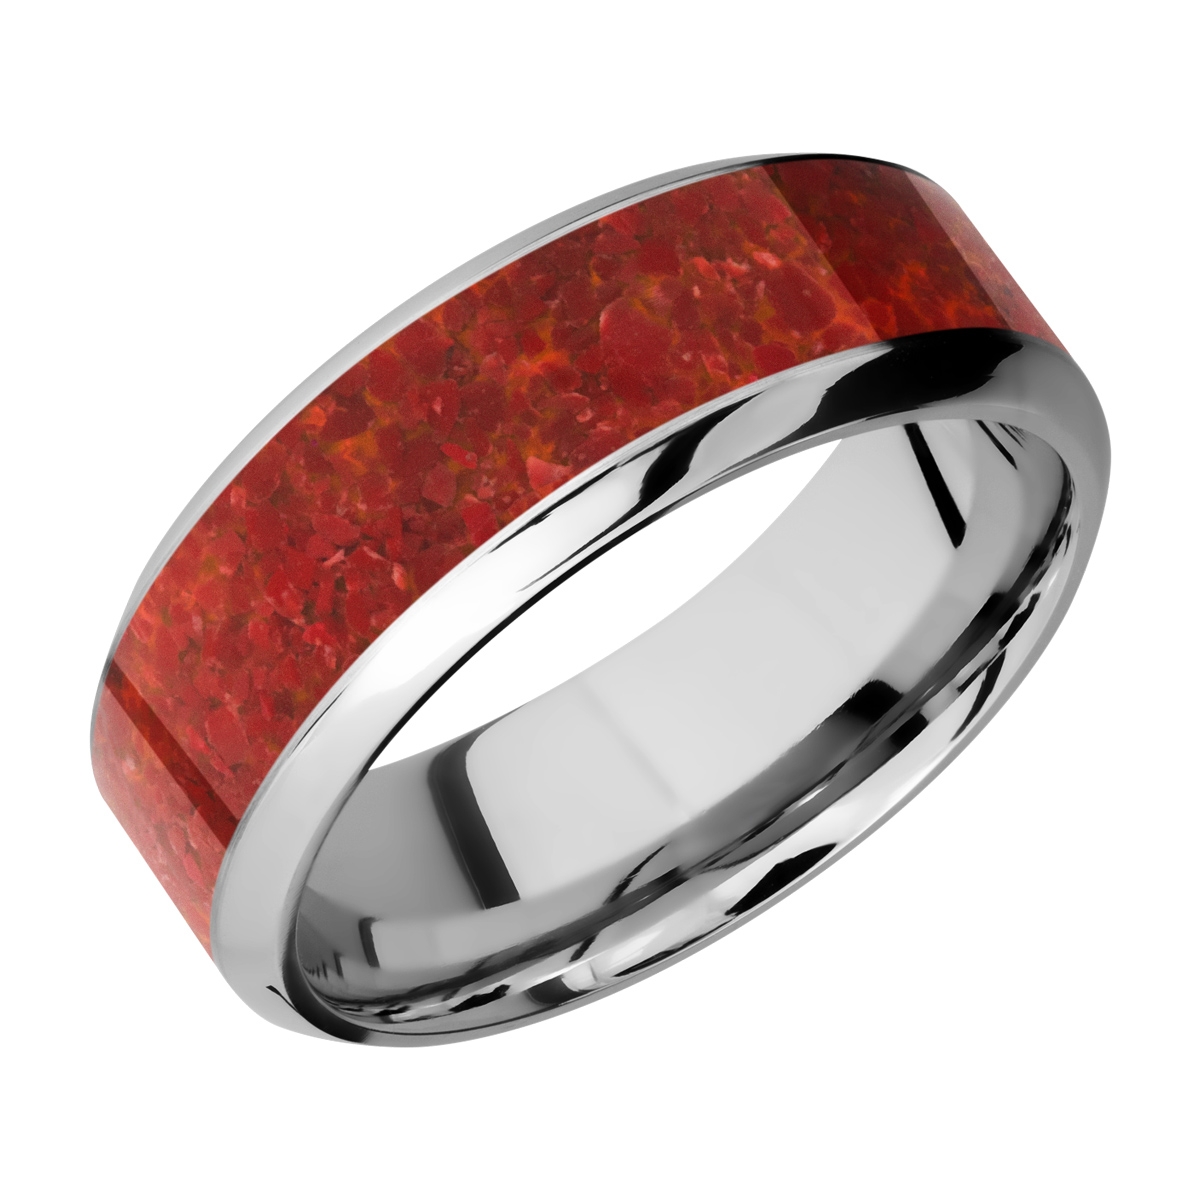 Lashbrook CC8HB15/MOSAIC Cobalt Chrome Wedding Ring or Band